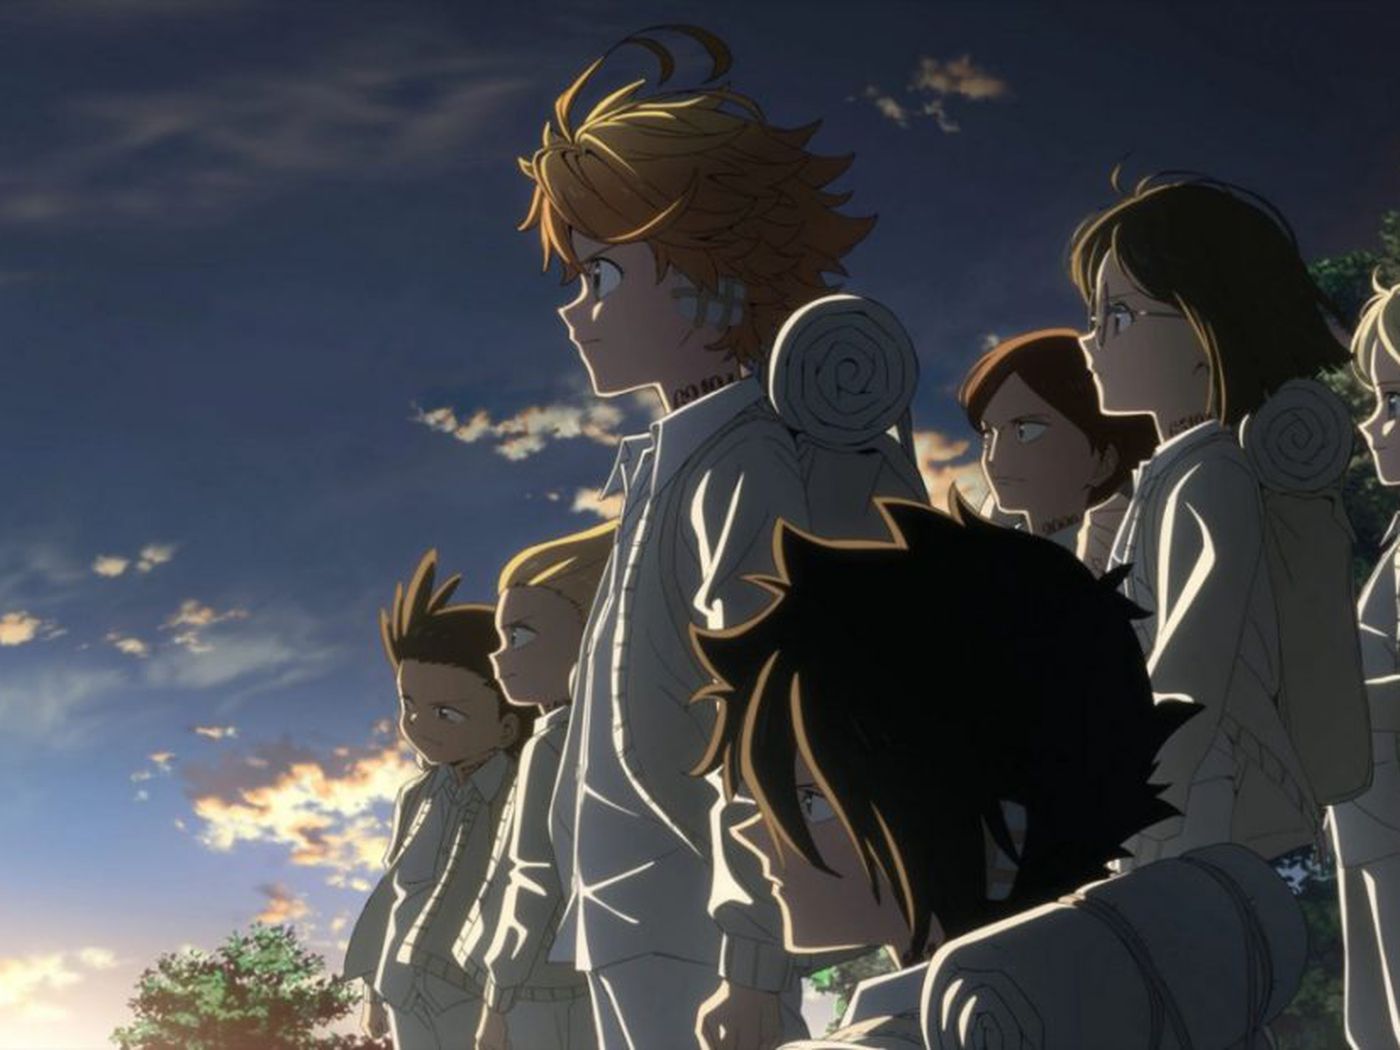 Manga Review: The Promised Neverland – SKJAM! Reviews